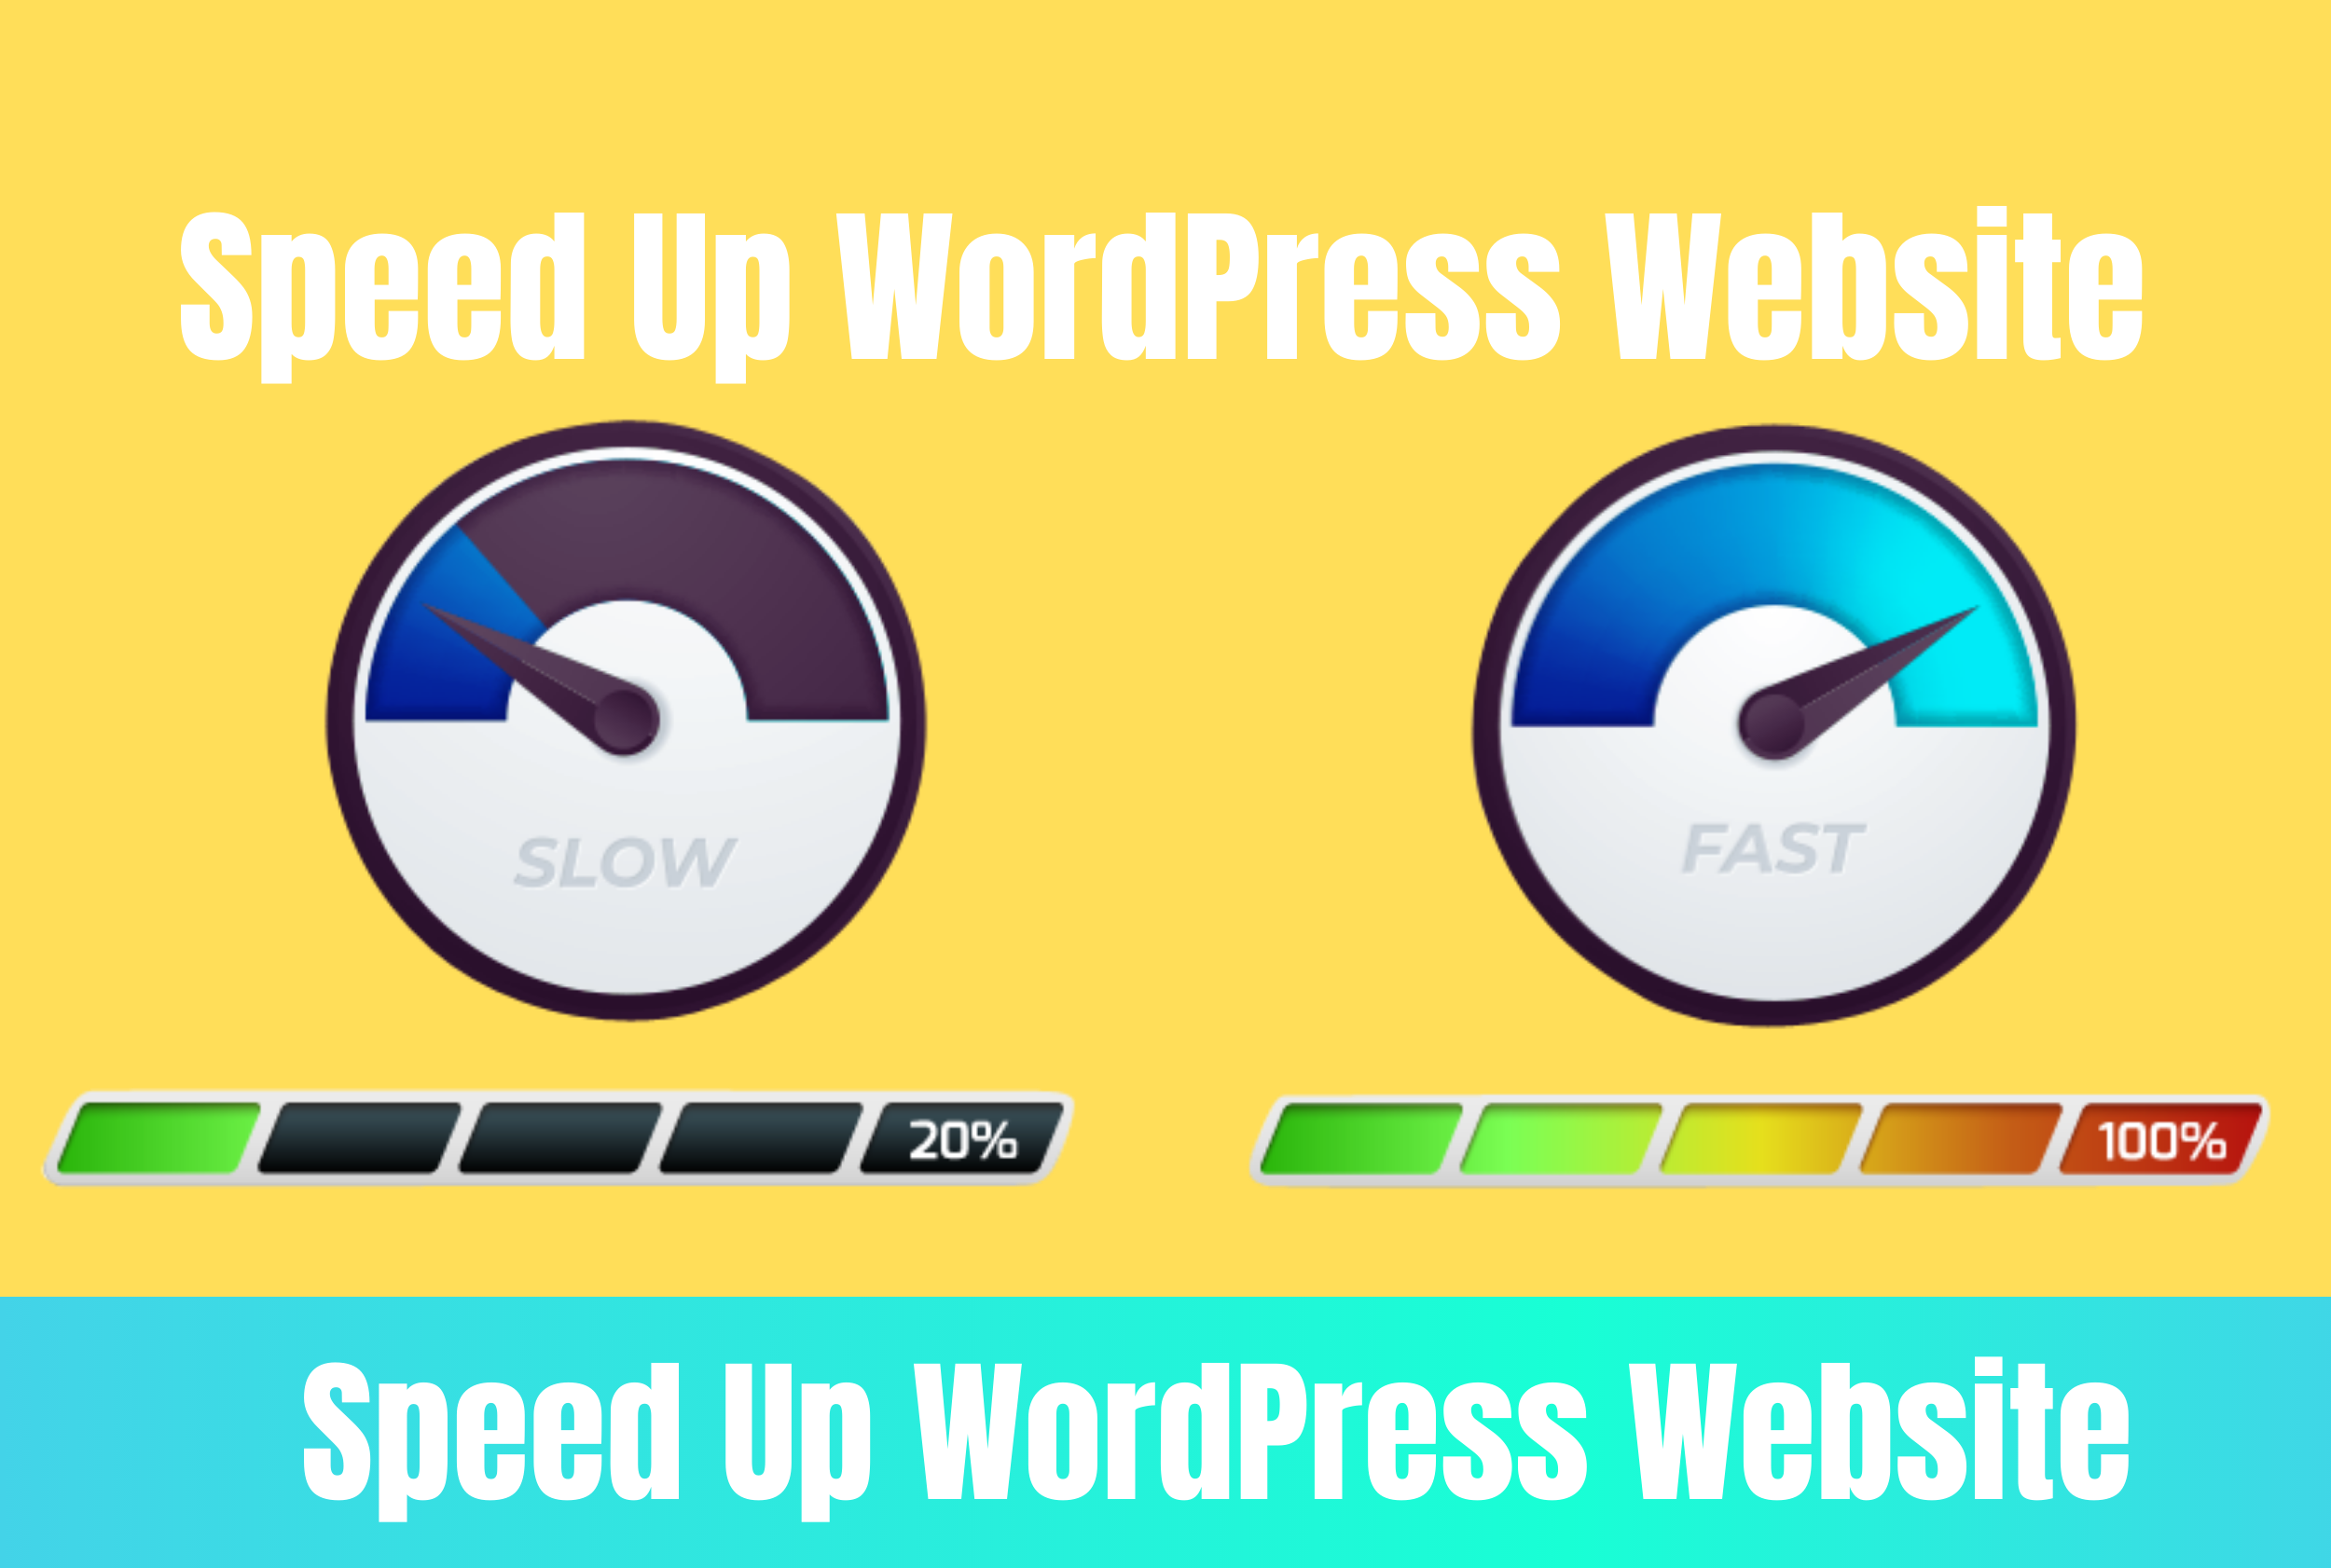 I will speed up wordpress speed optimization for pagespeed insights, wp rocket,gtmetrix